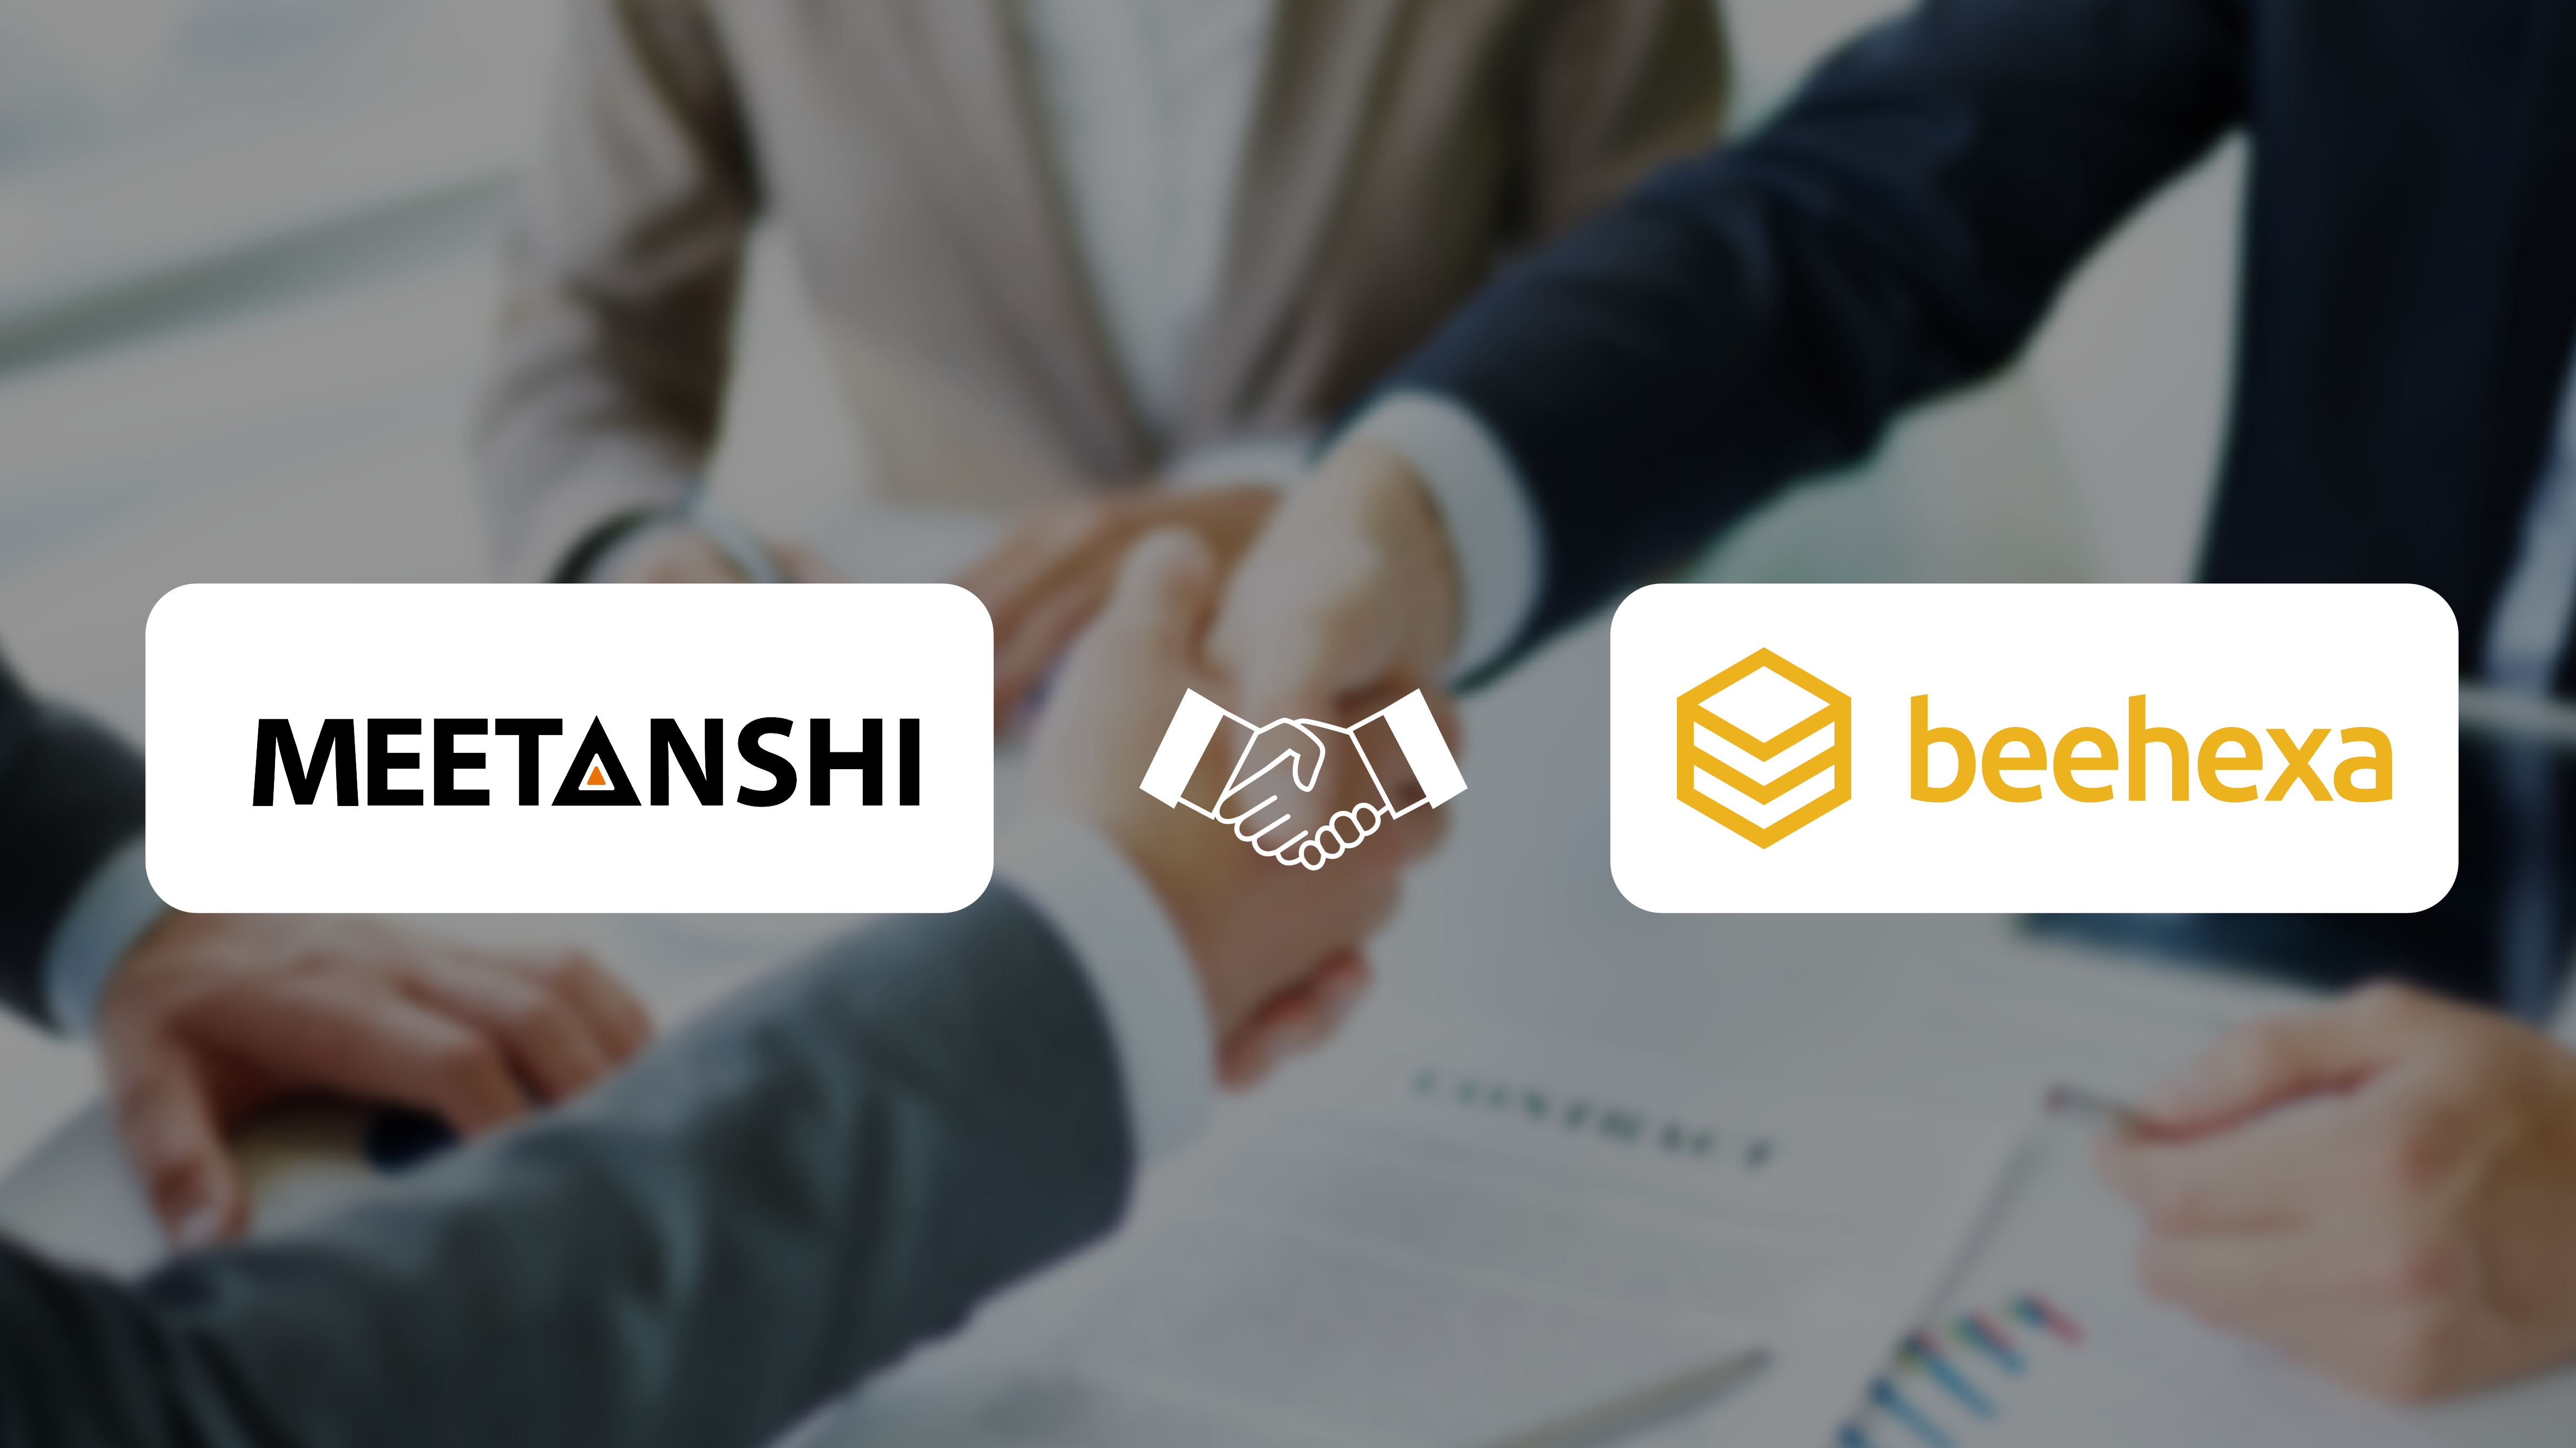 Meetanshi And Beehexa Partnership